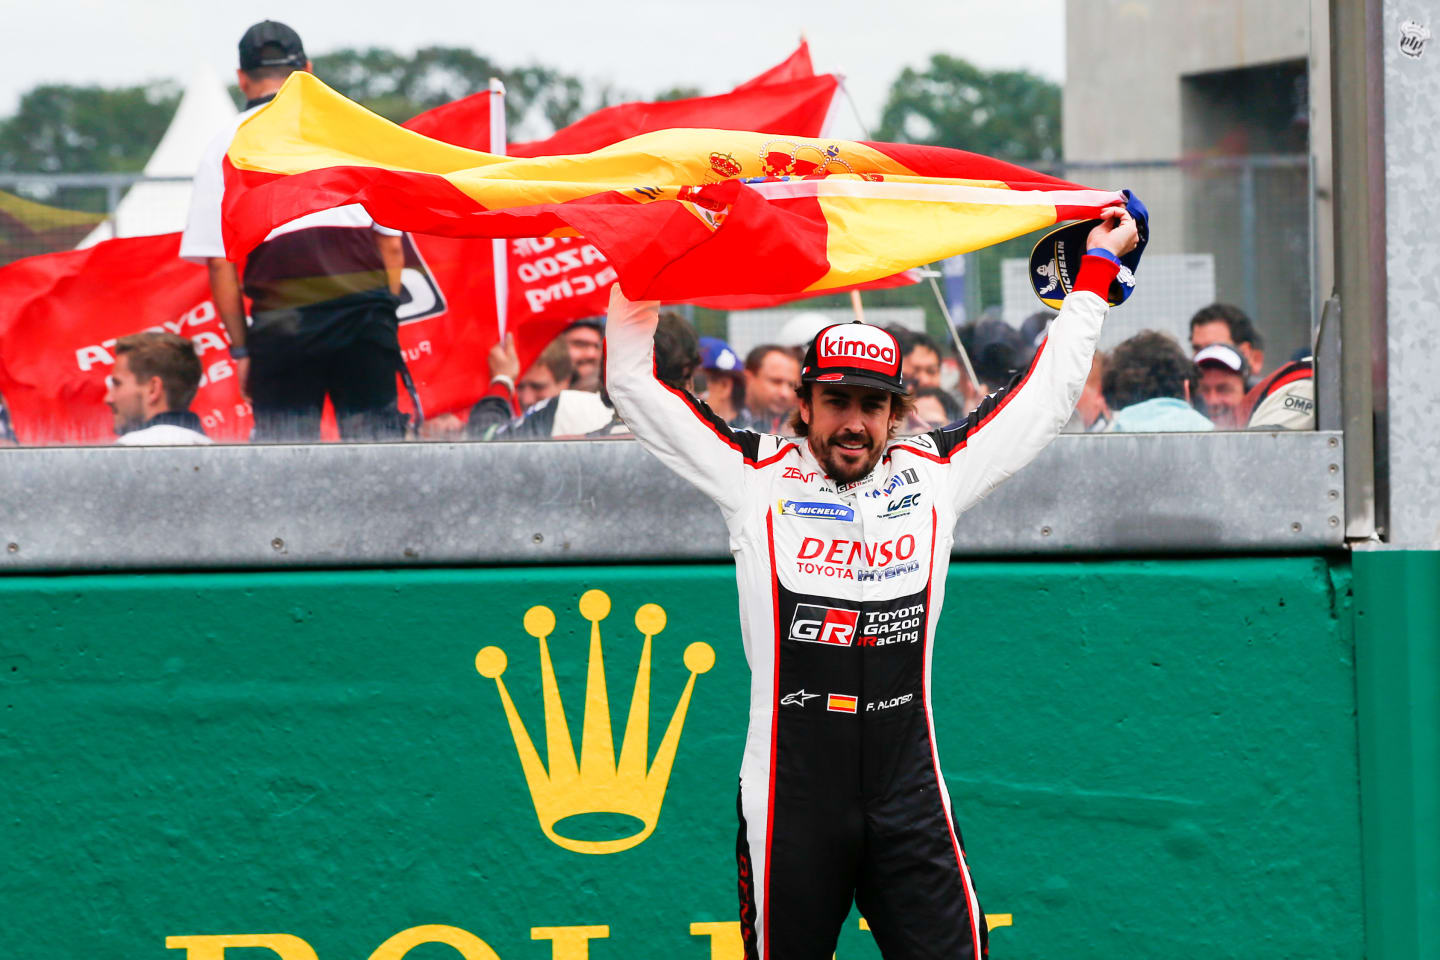 CIRCUIT DE LA SARTHE, FRANCE - JUNE 17: Fernando Alonso, Toyota Gazoo Racing during the 24 Hours of